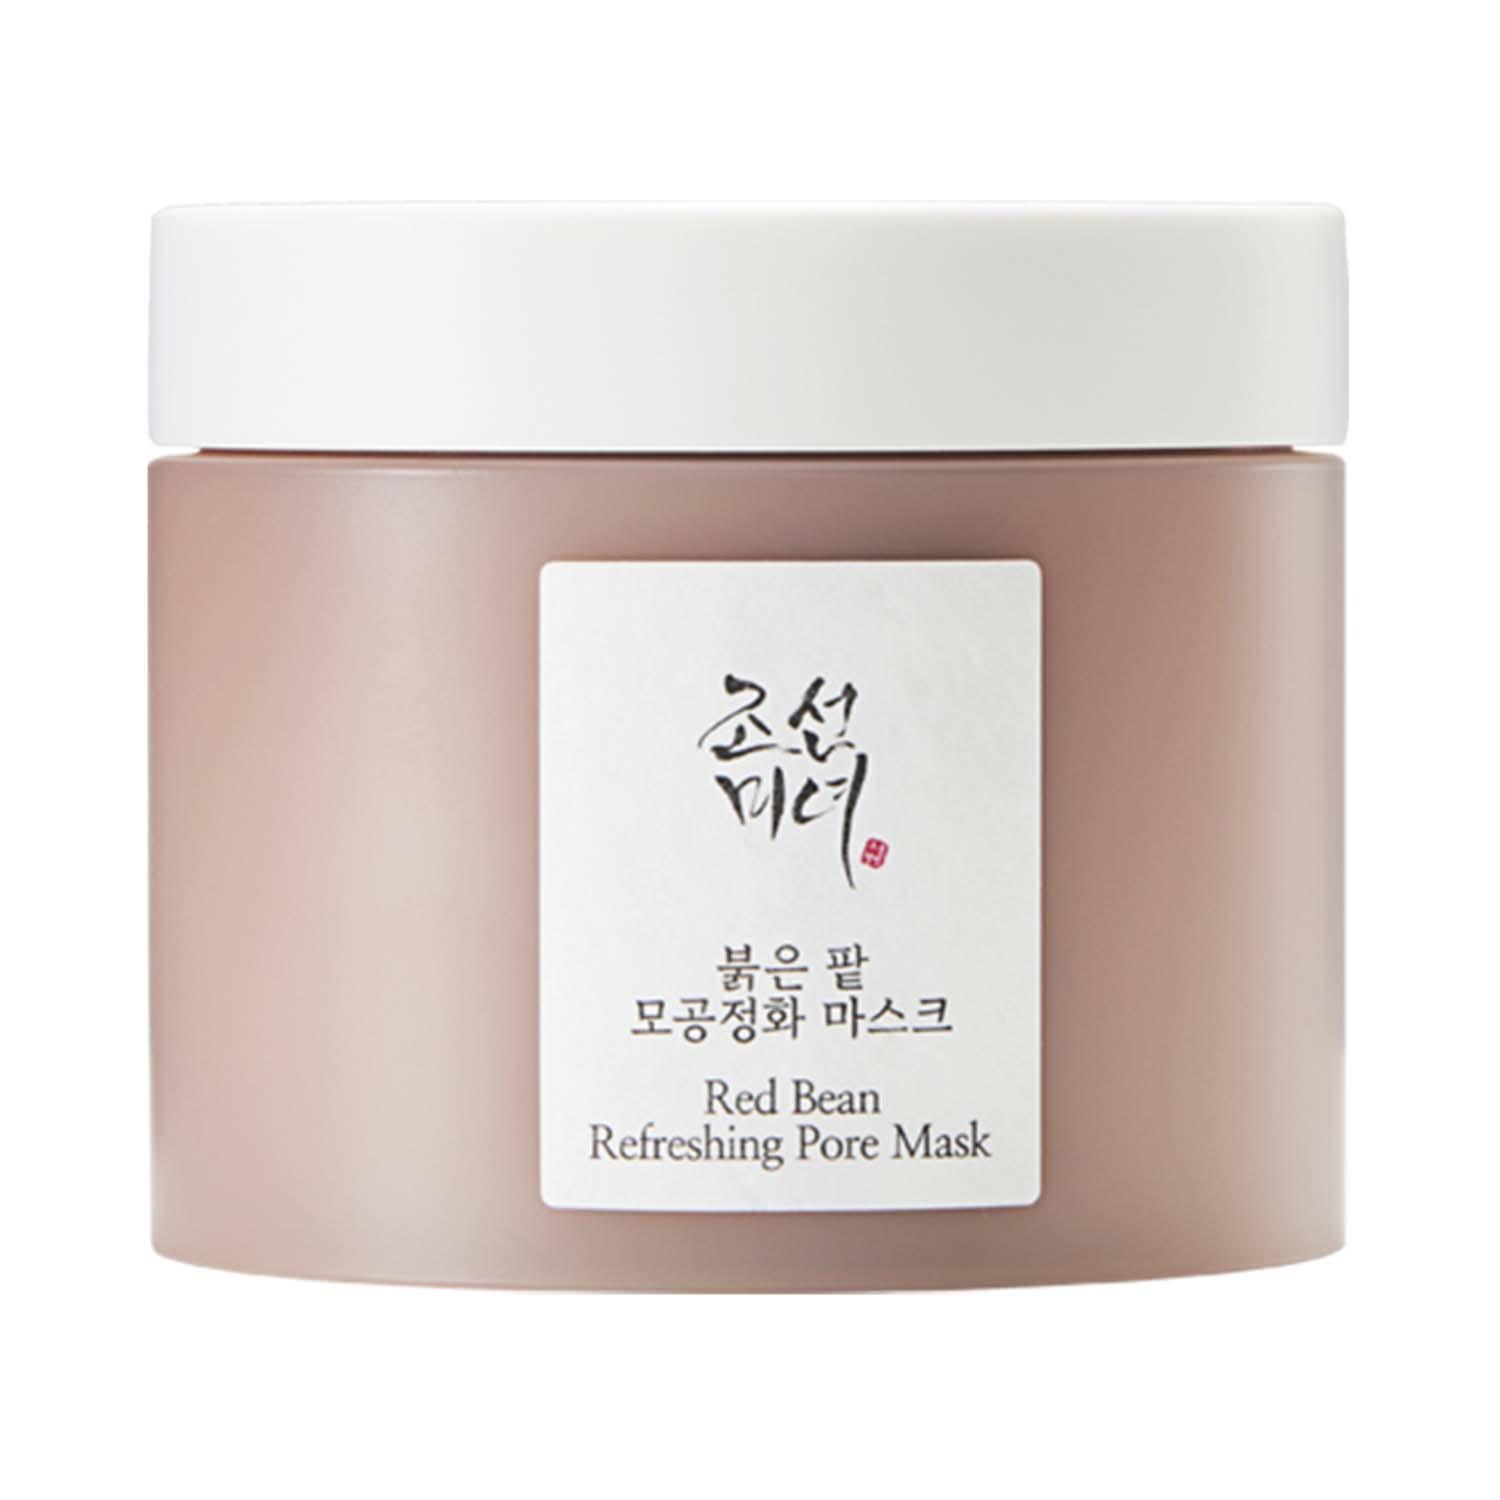 Beauty of Joseon | Beauty of Joseon Red Bean Refreshing Pore Mask (140 ml)